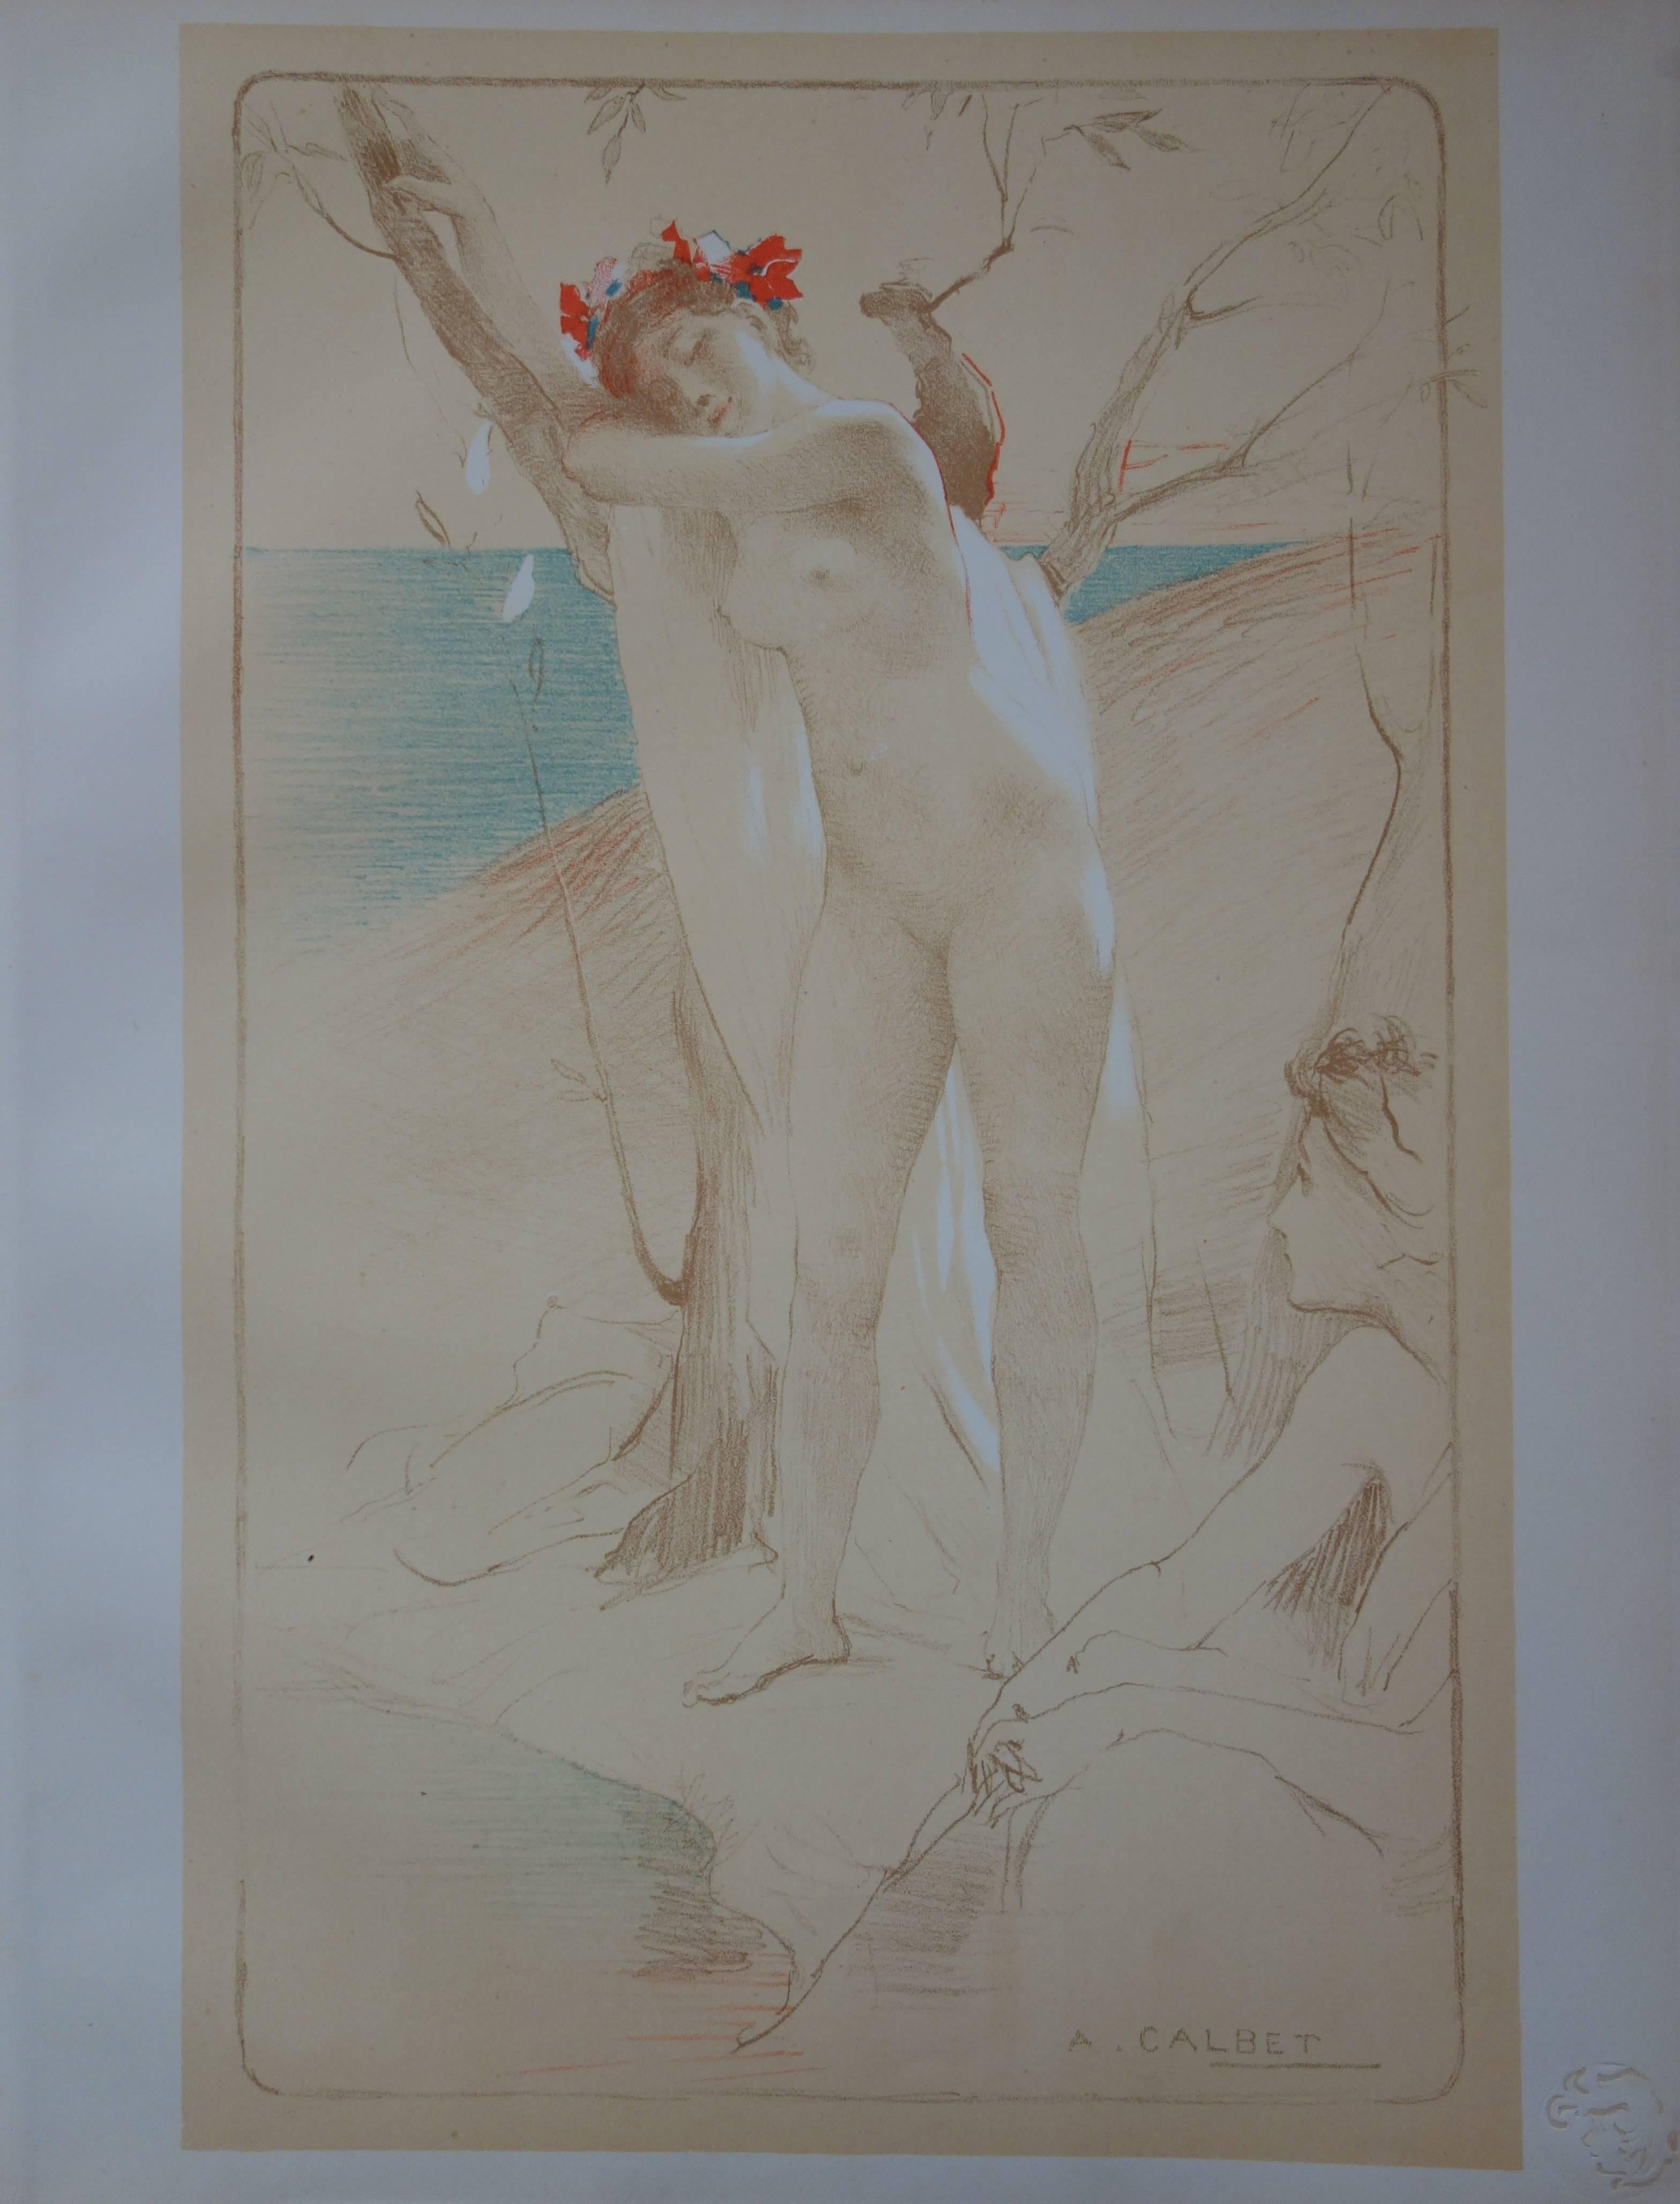 Antoine Calbet Nude Print - L'Inconnue - Original lithograph - 1897